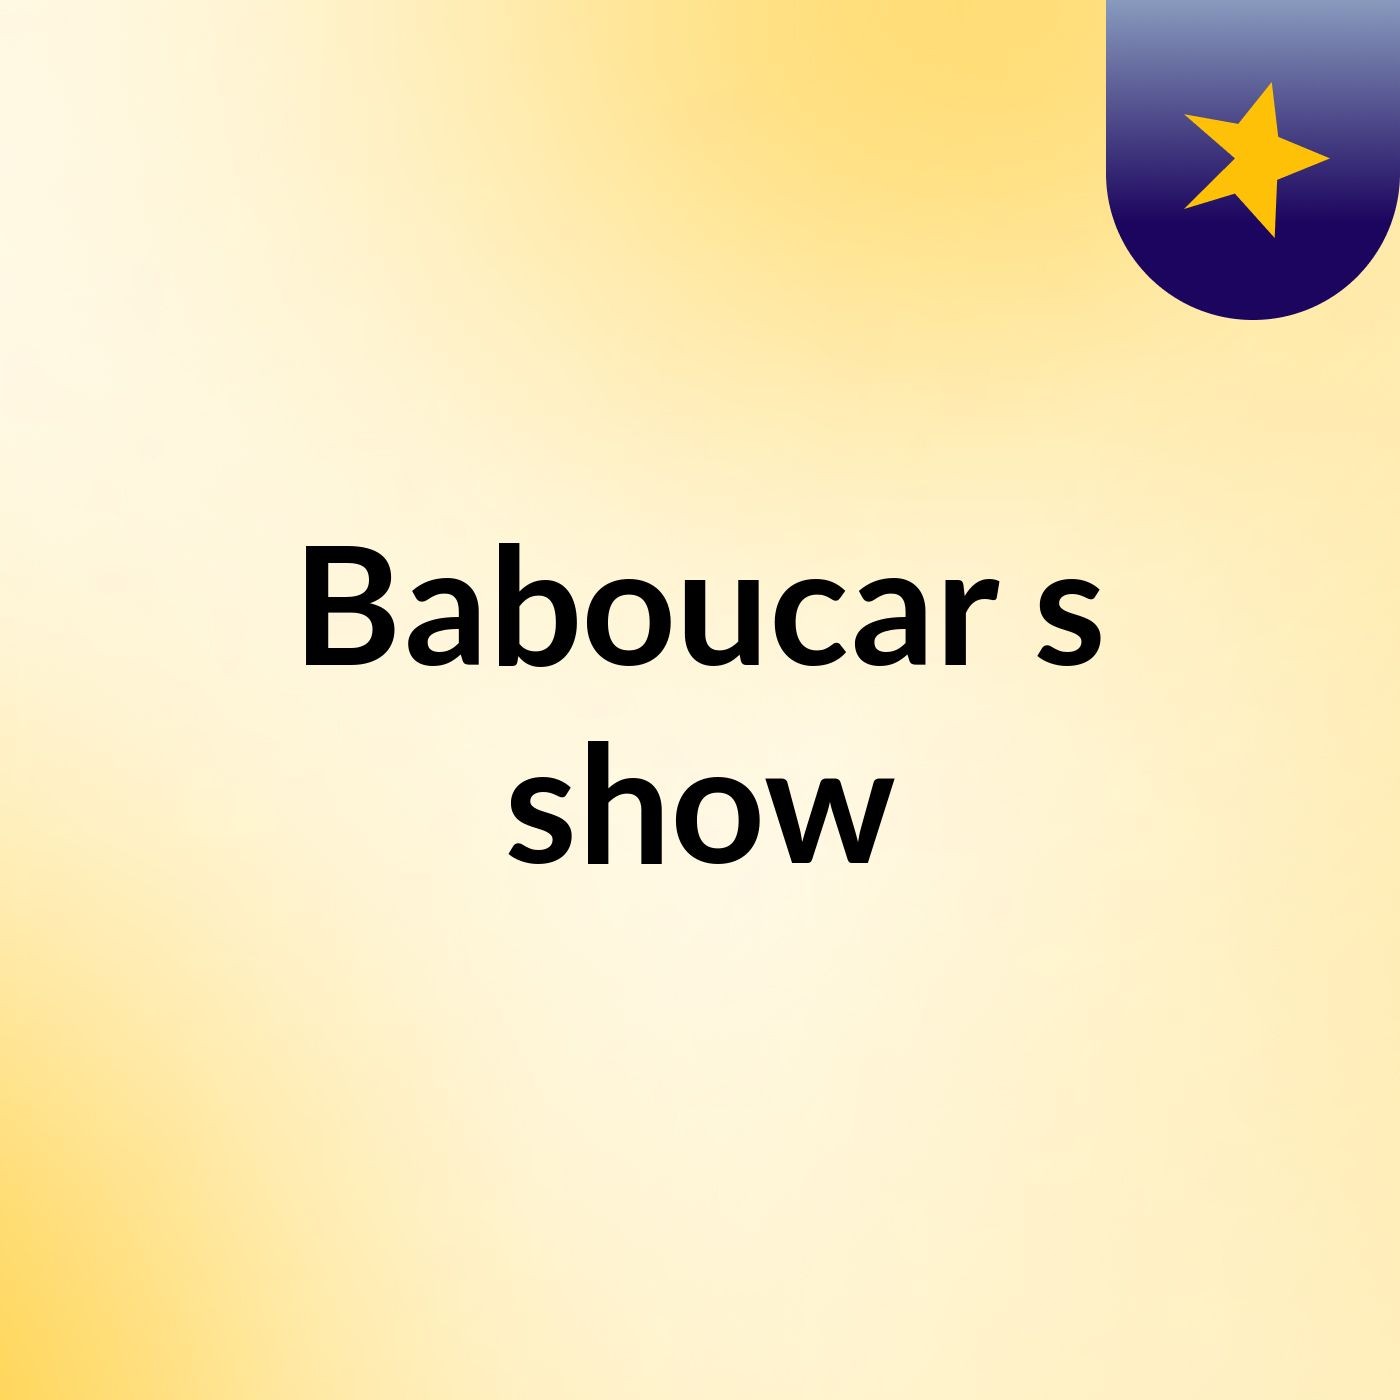 Baboucar's show